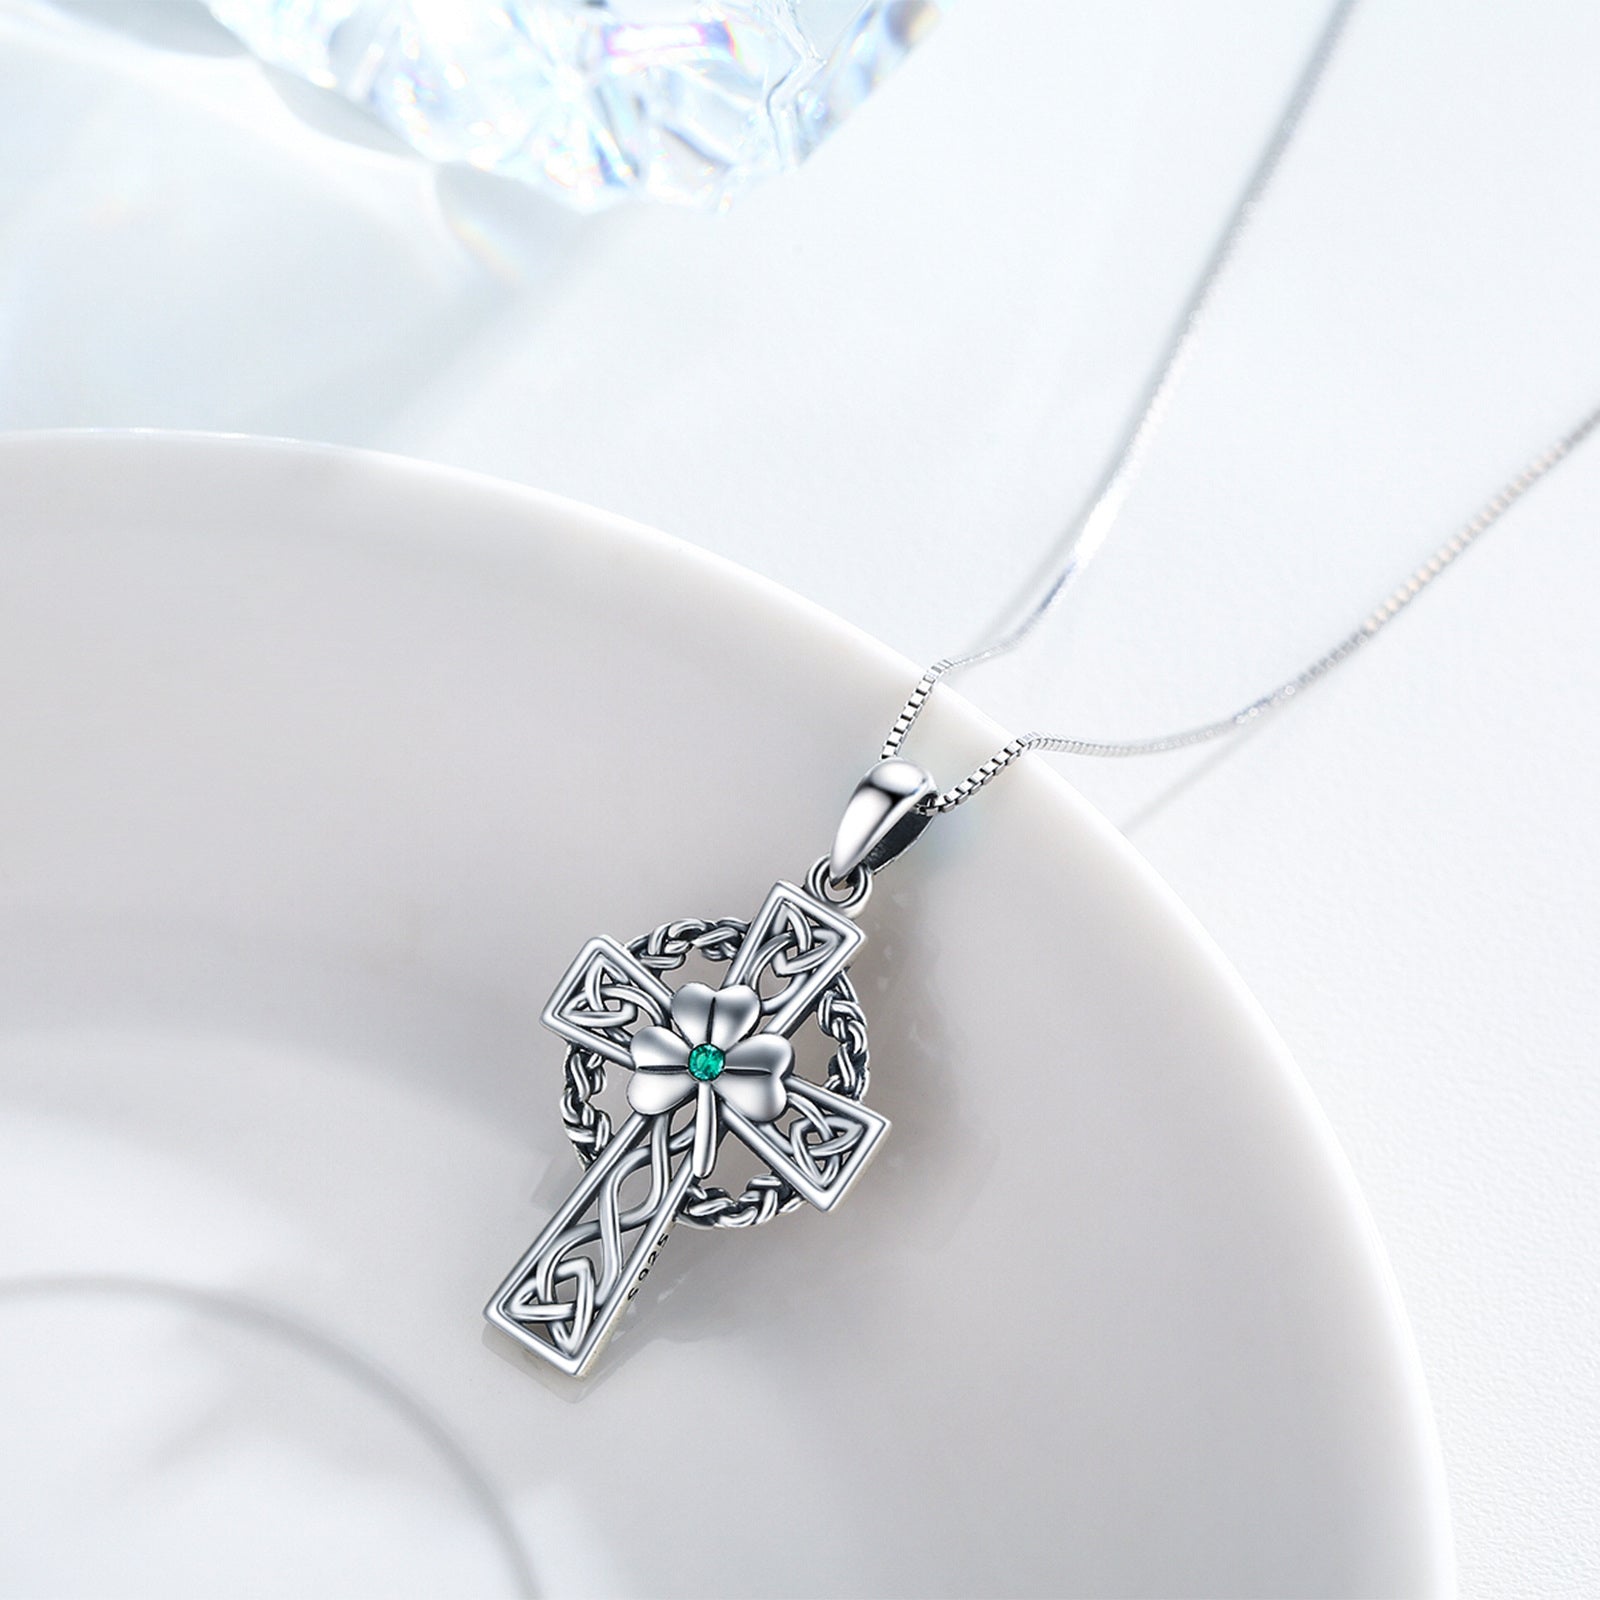 A Maramalive™ Irish Luck Necklace with emerald stone.